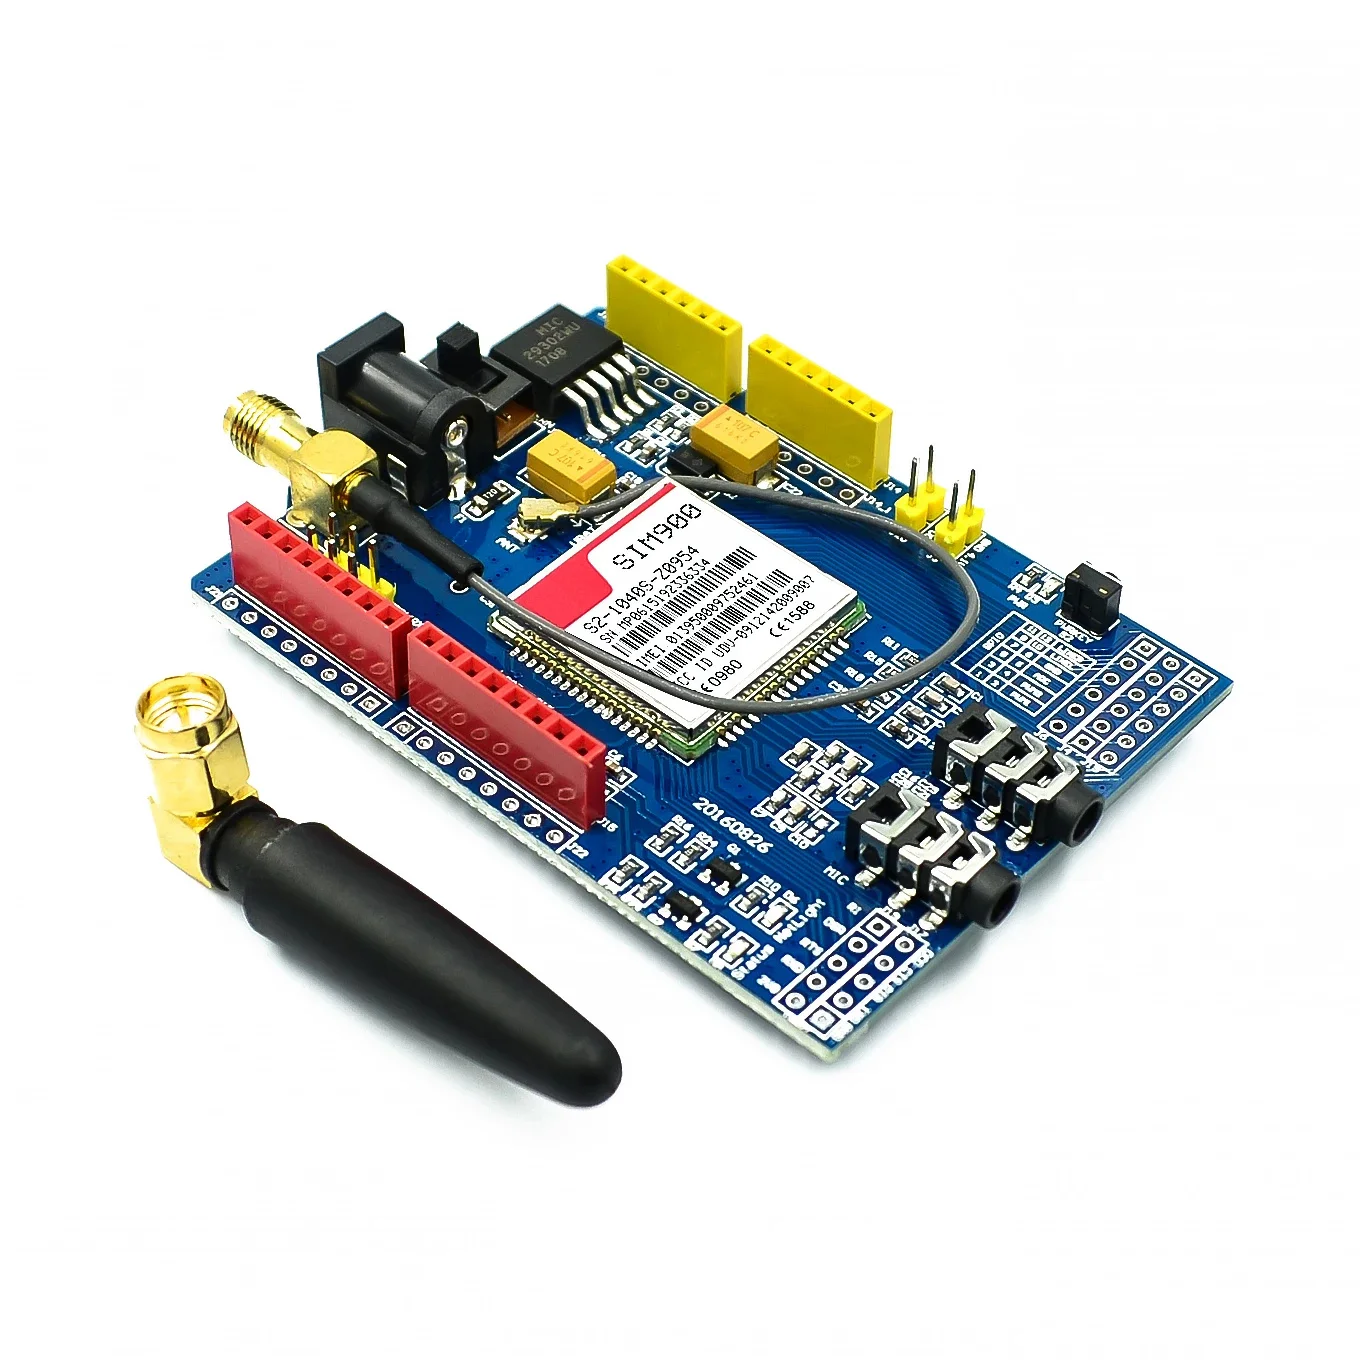 

SIM900 GPRS GSM Shield Development Board Quad-Band Module Kit For Arduino